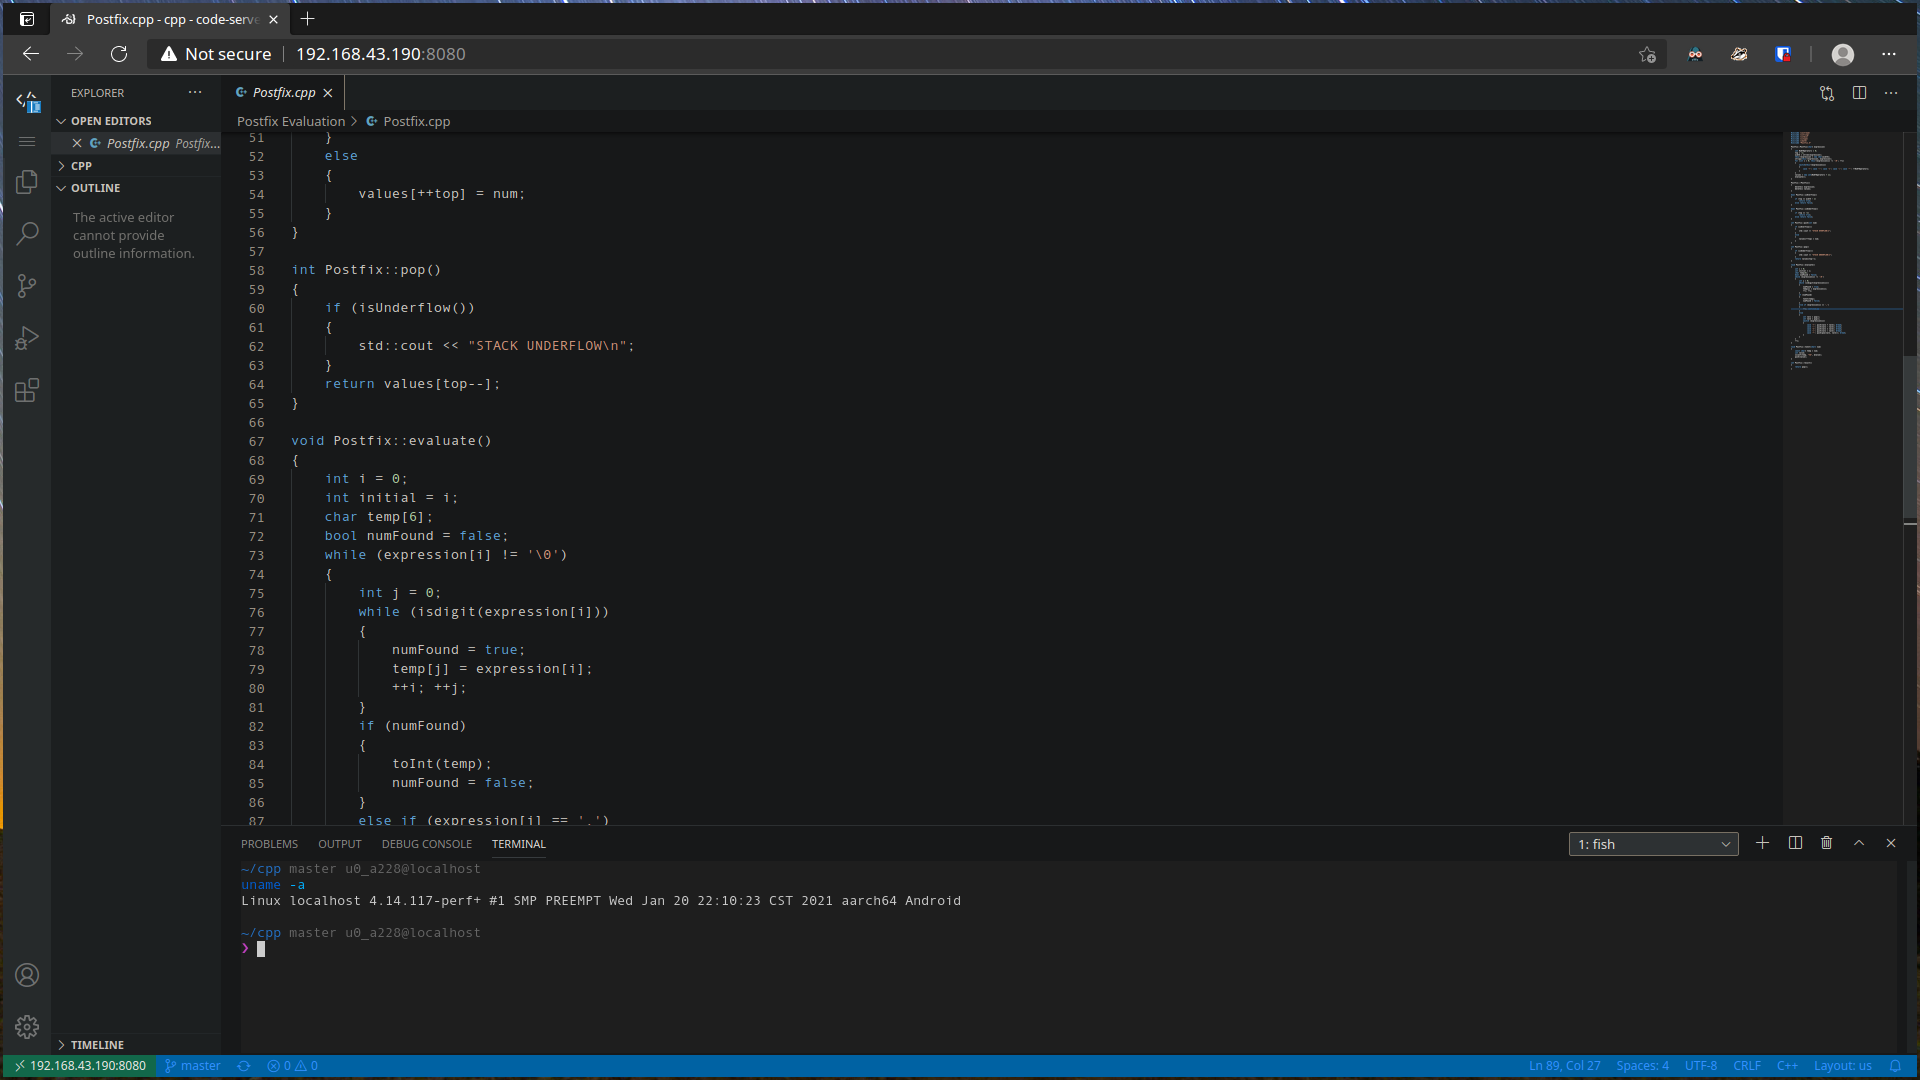 Screenshot of code-server running on a tablet